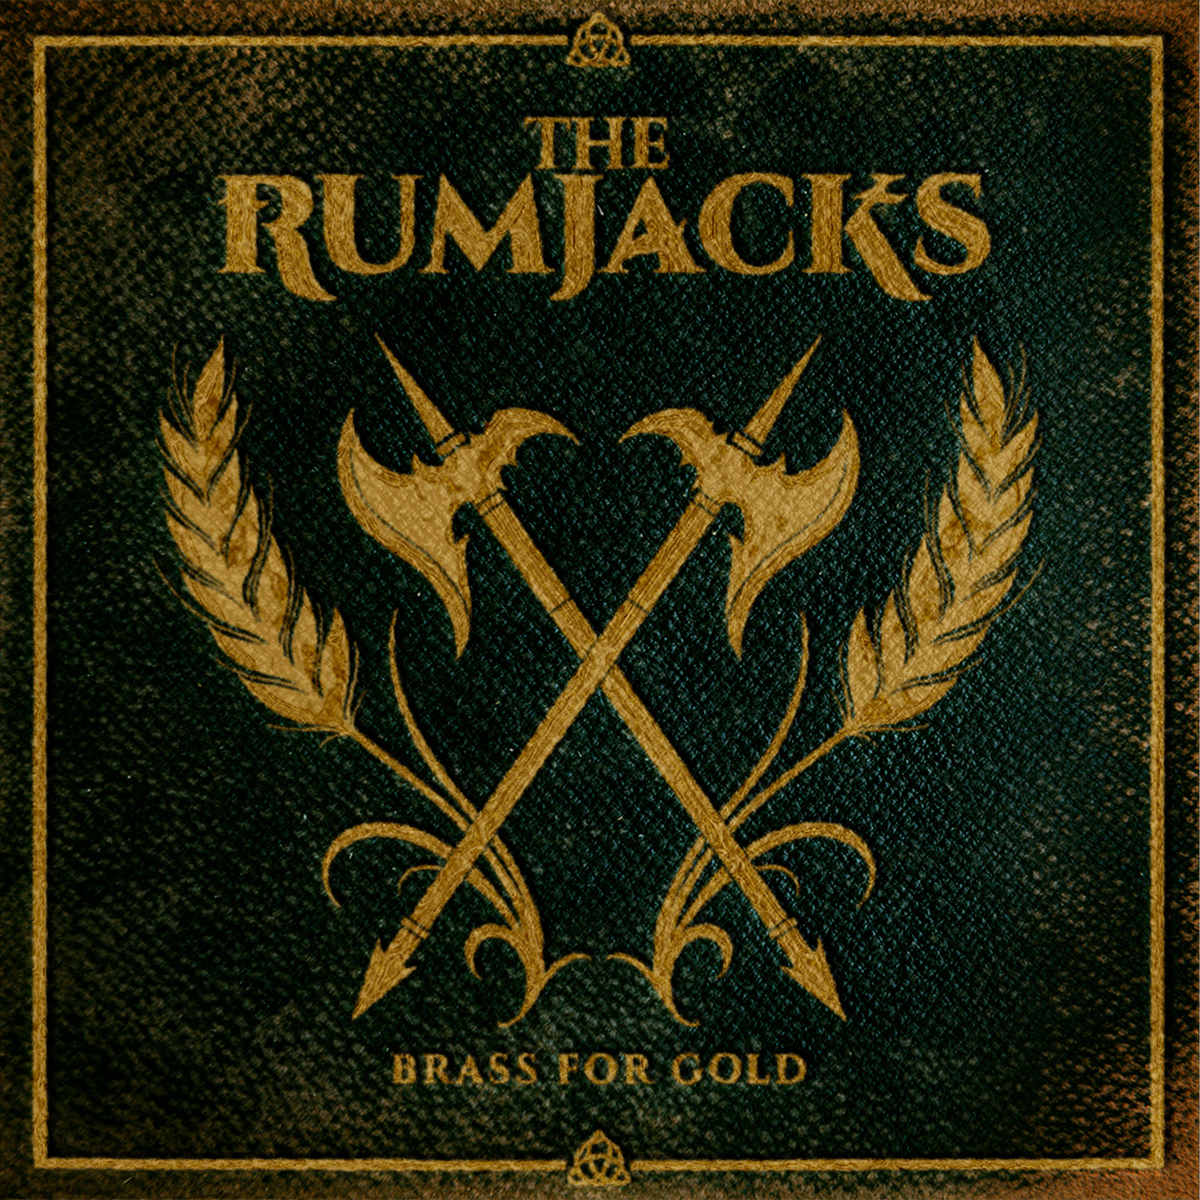 The Rumjacks Brass For Gold